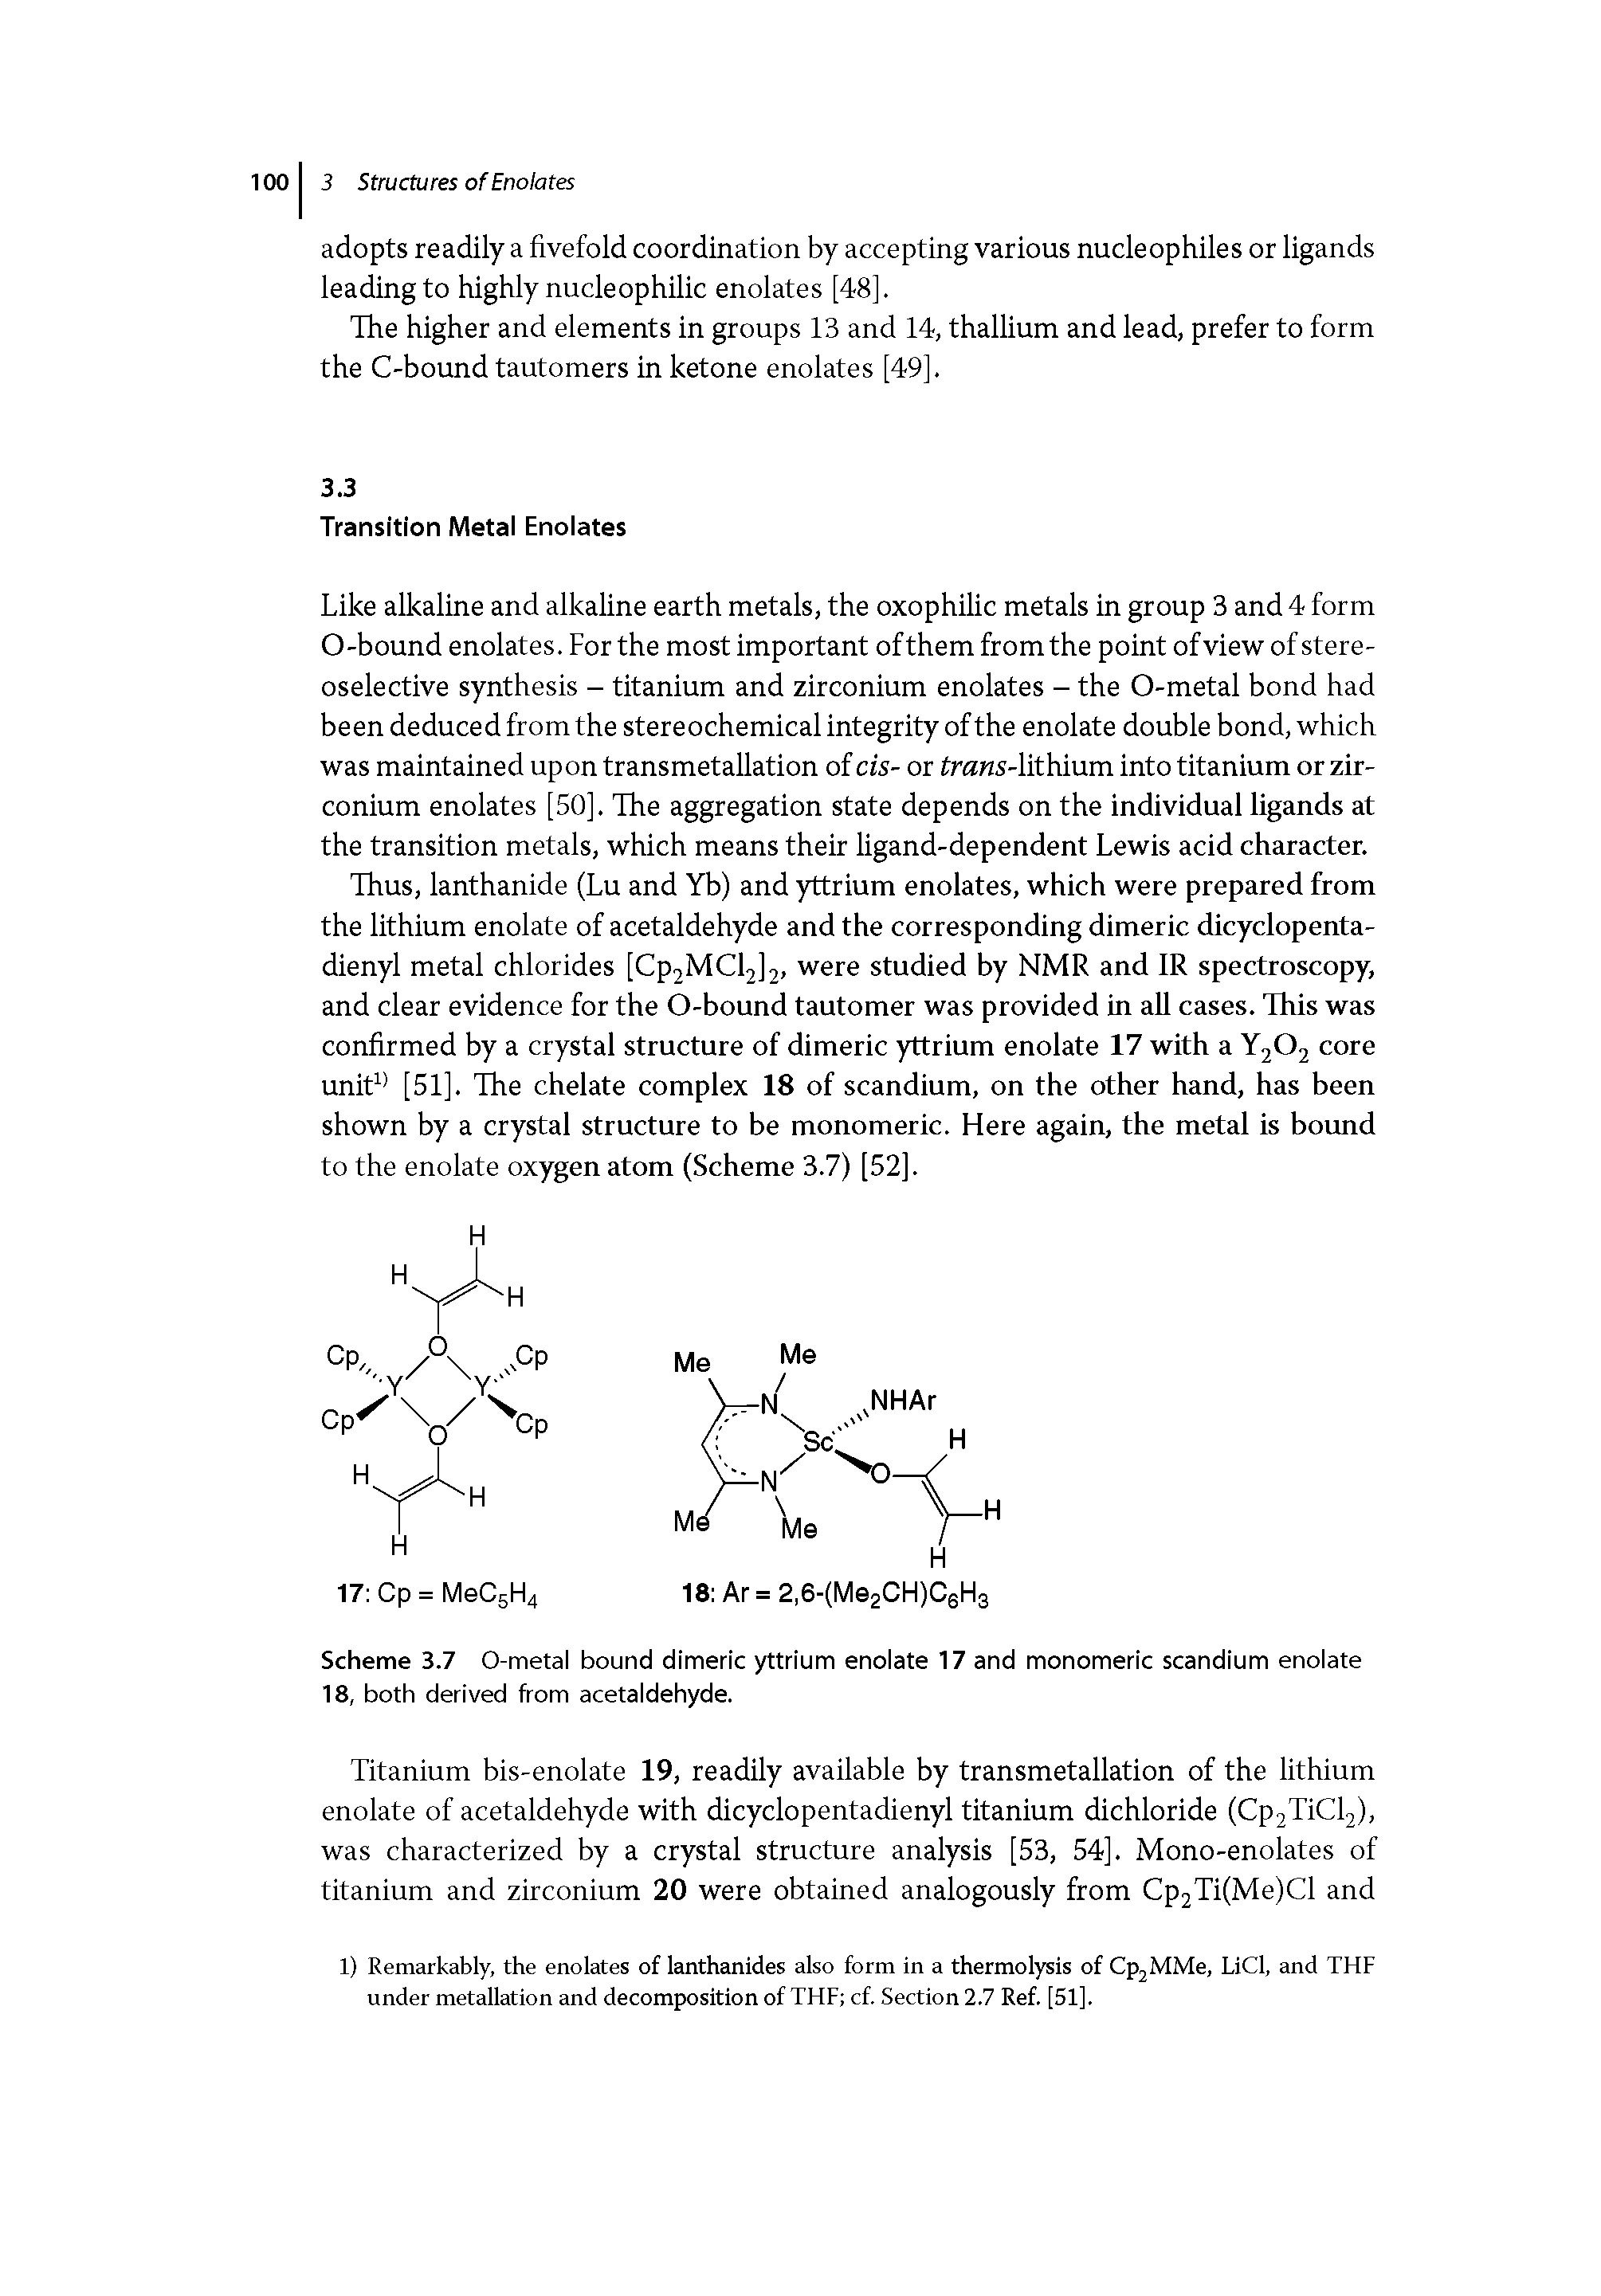 Scheme 3.7 O-metal bound dimeric yttrium enolate 17 and monomeric scandium enolate 18, both derived from acetaldehyde.